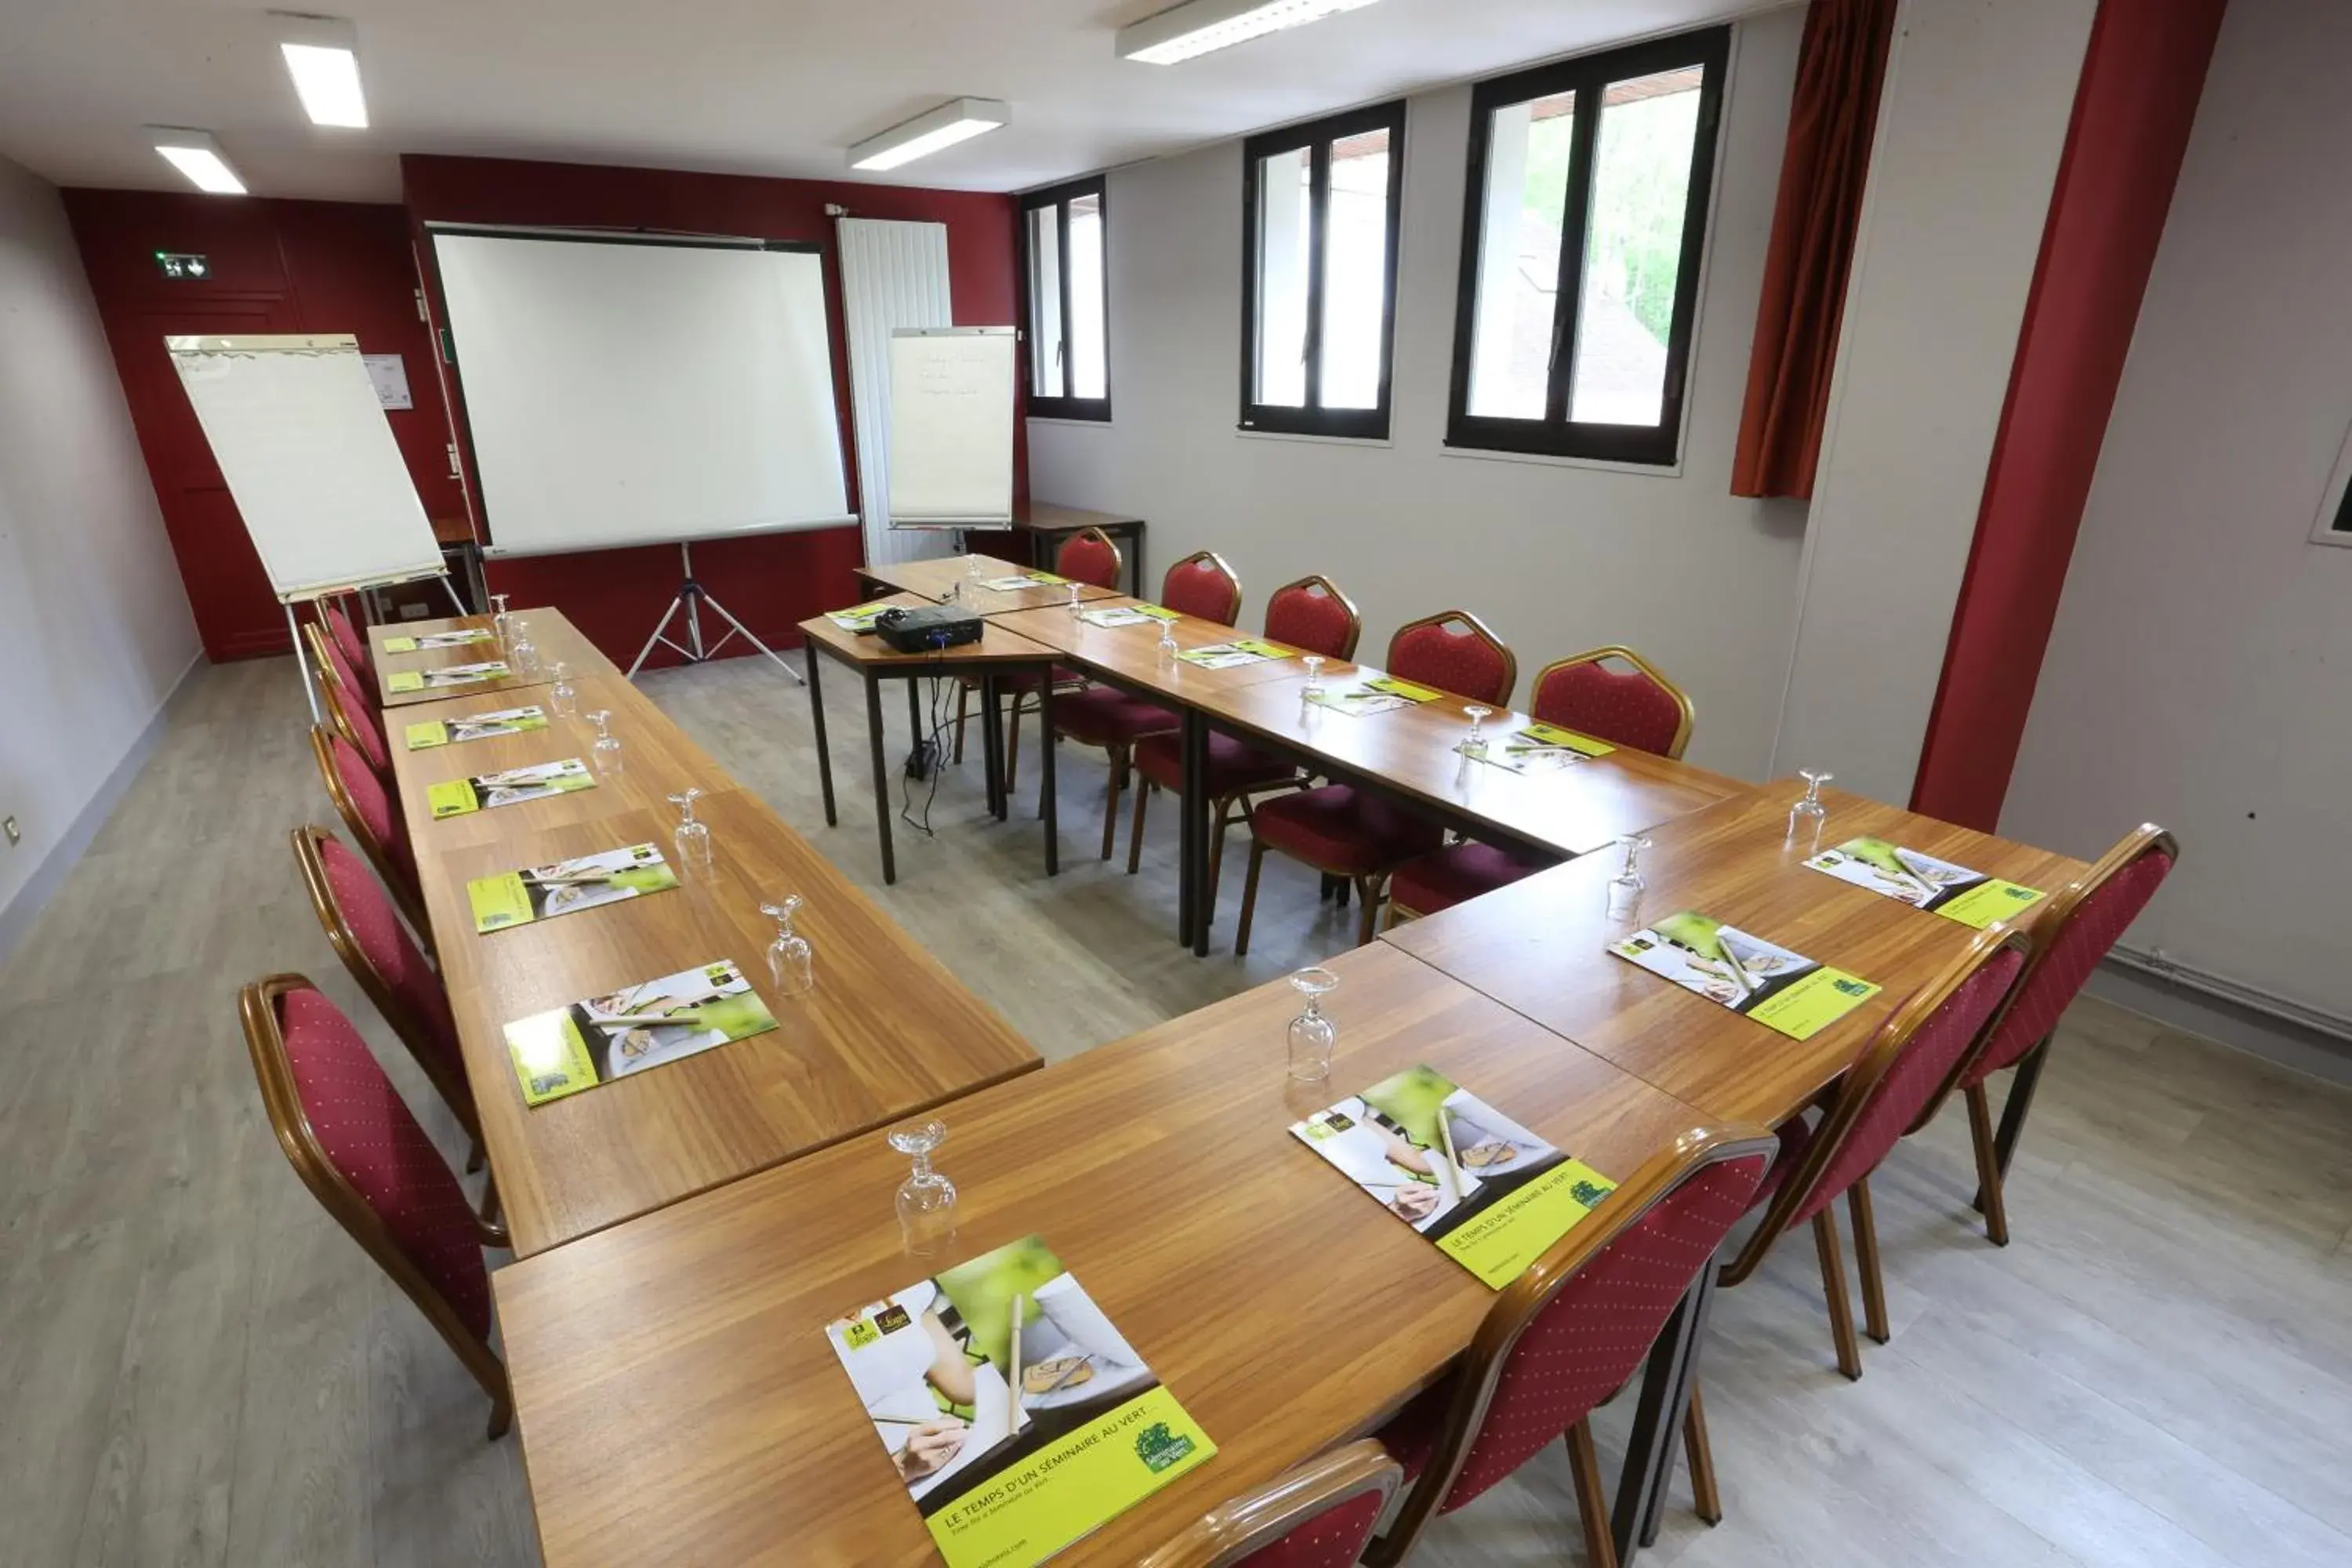 Meeting/conference room in Le Moulin de la Coudre